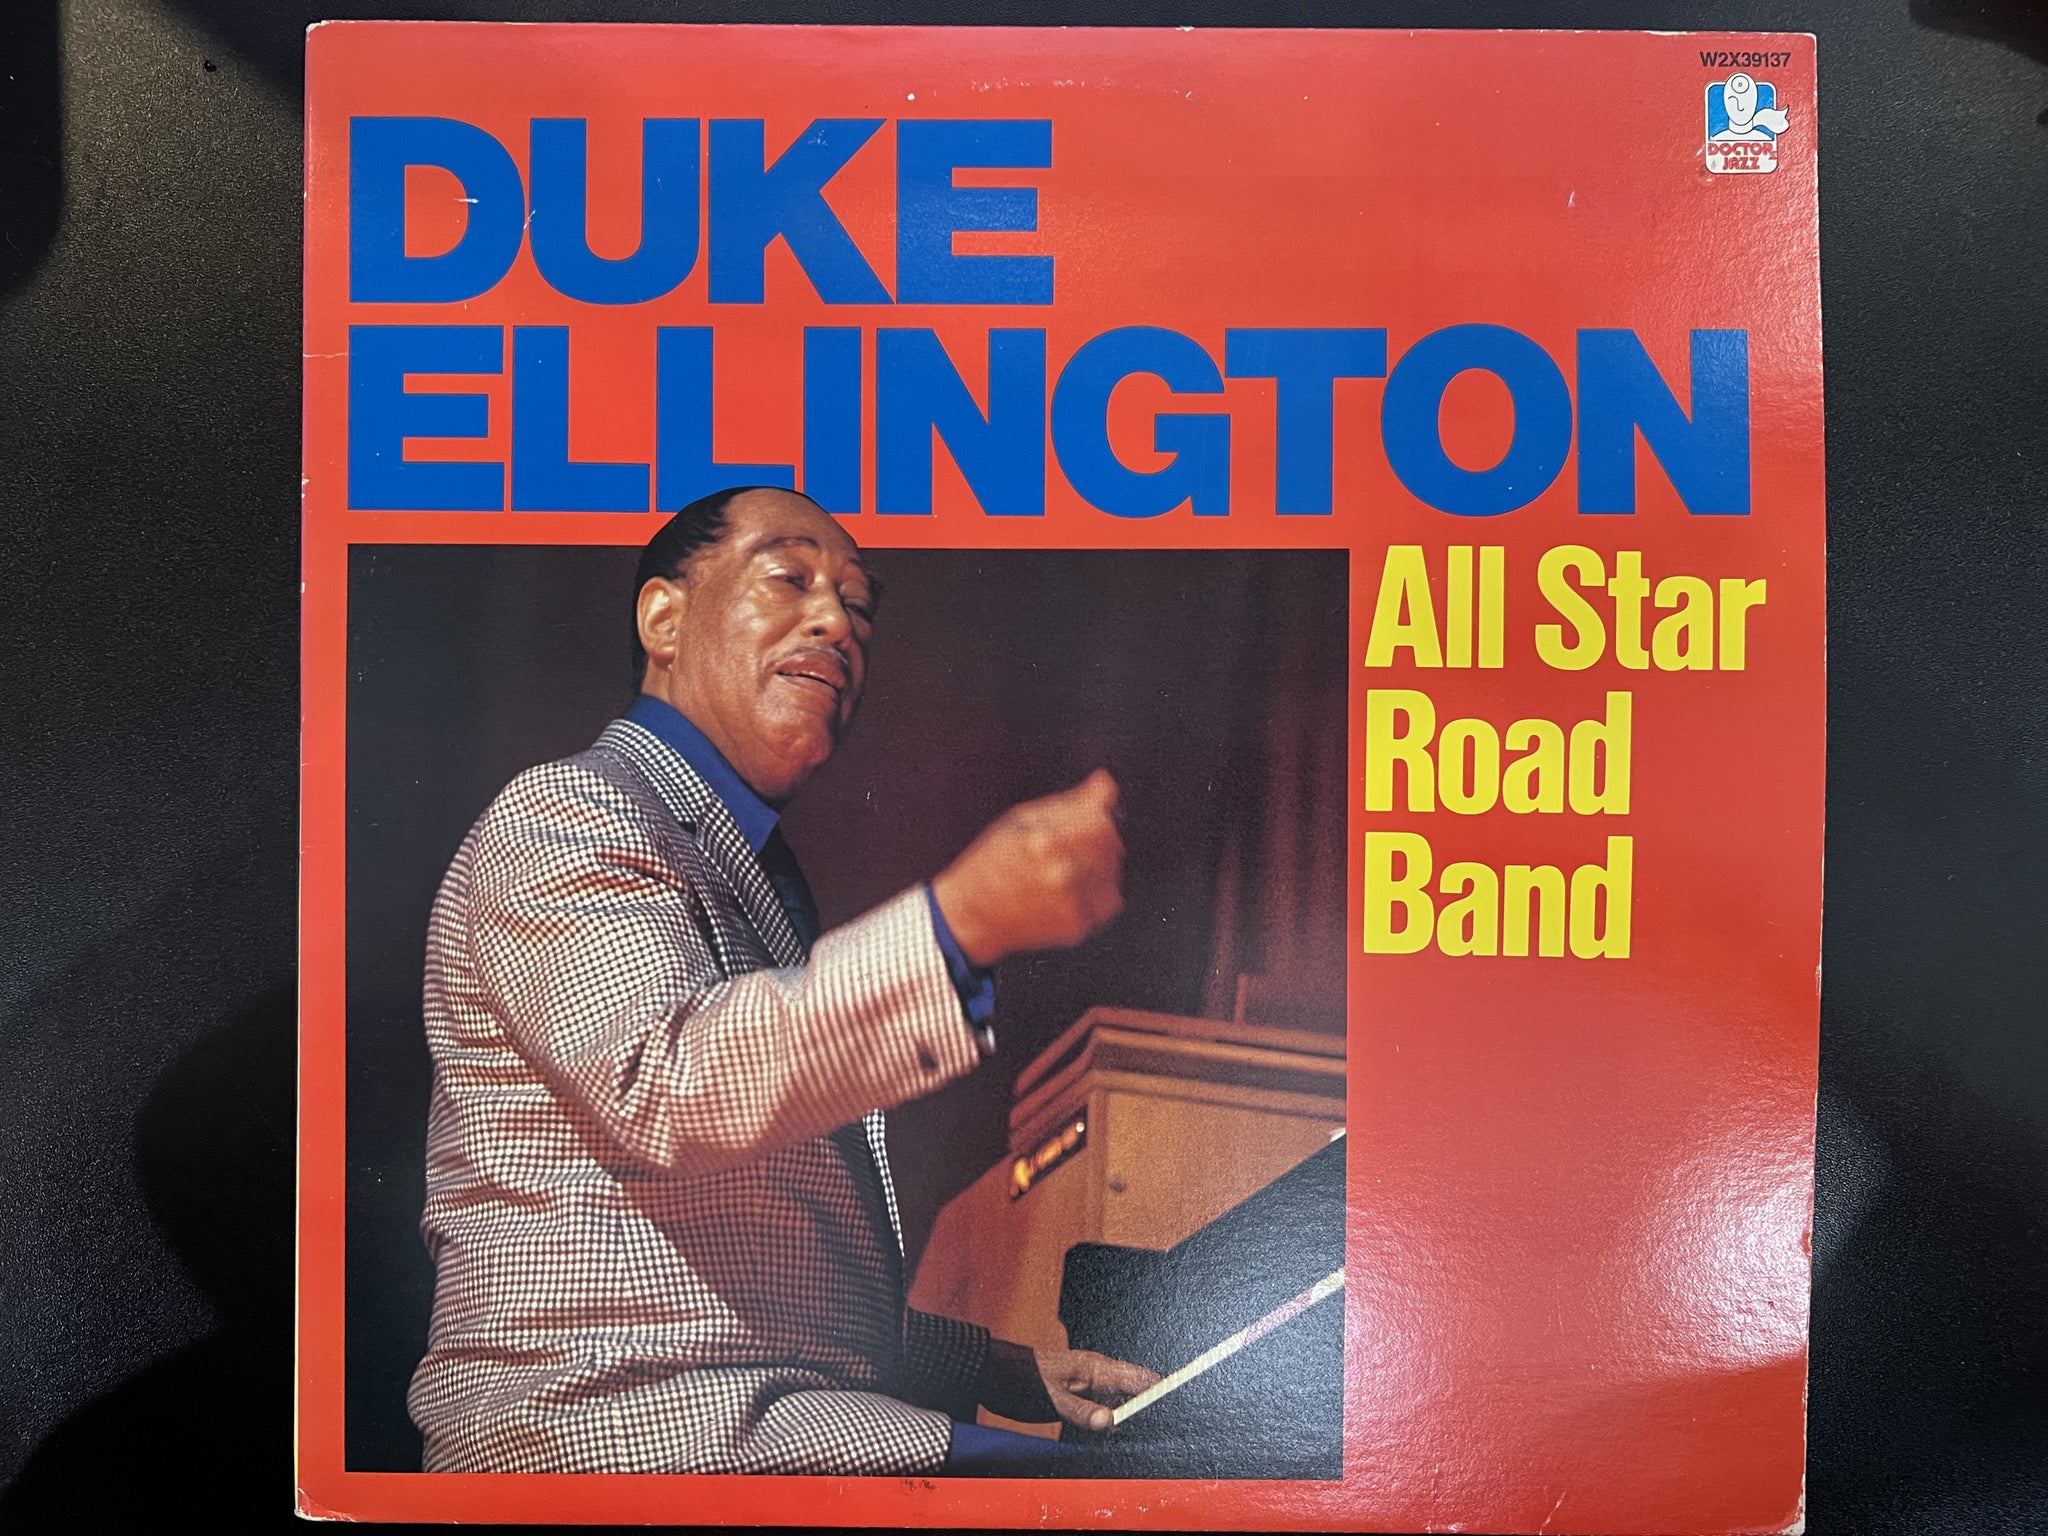 Duke Ellington – All Star Road Band - Mint- 2 LP Record 1983 Doctor Jazz USA Promo Vinyl - Big Band / Swing